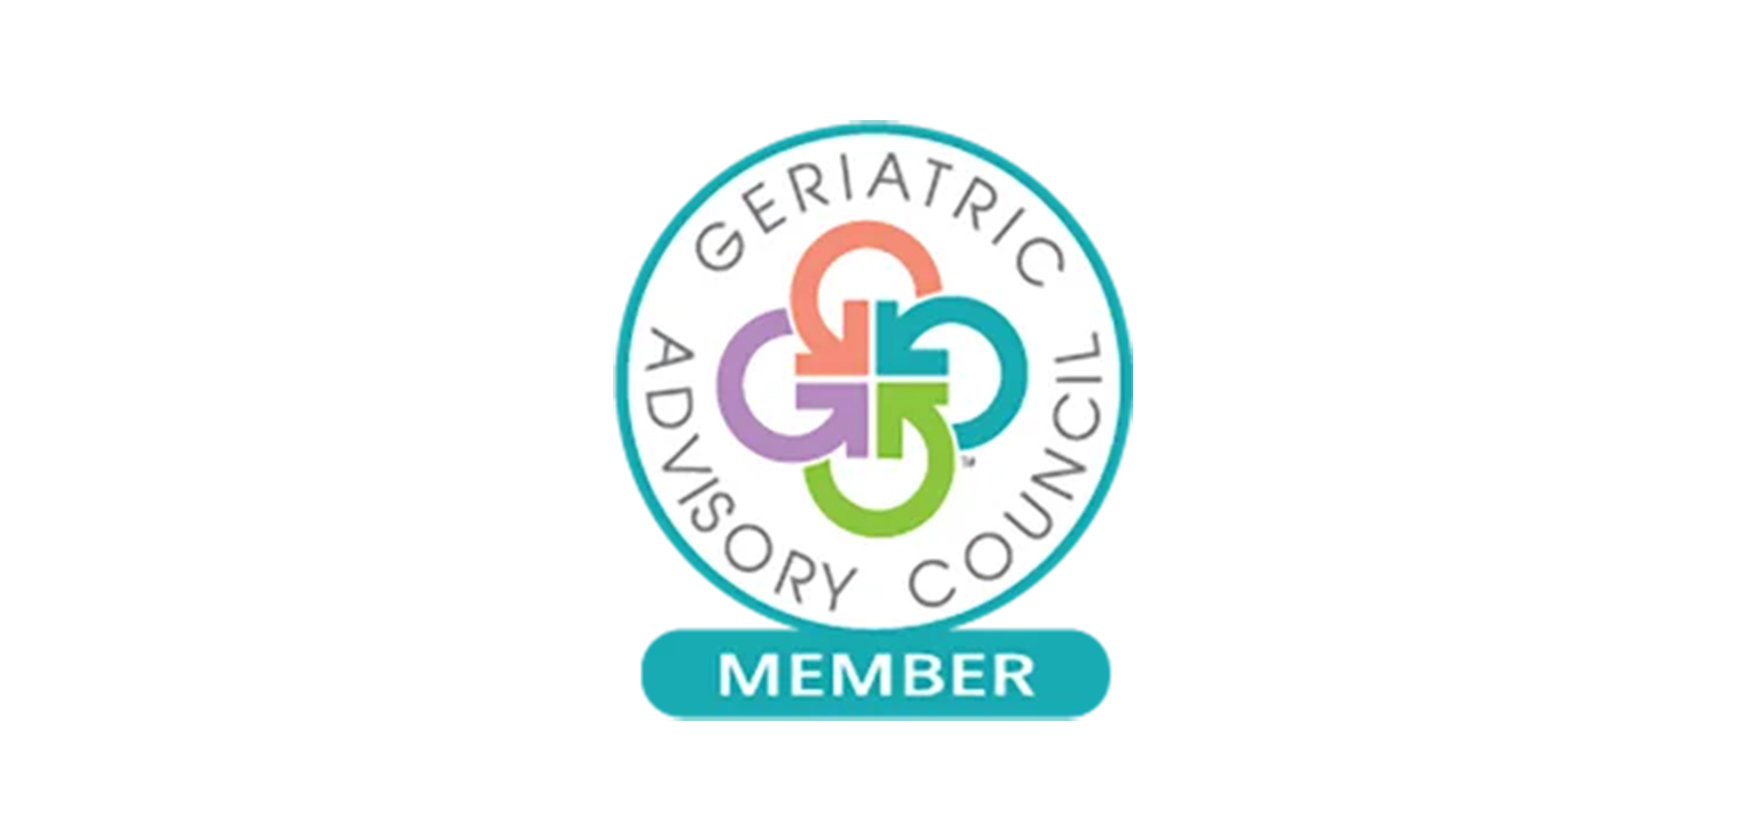 The Geriatric Advisory Council